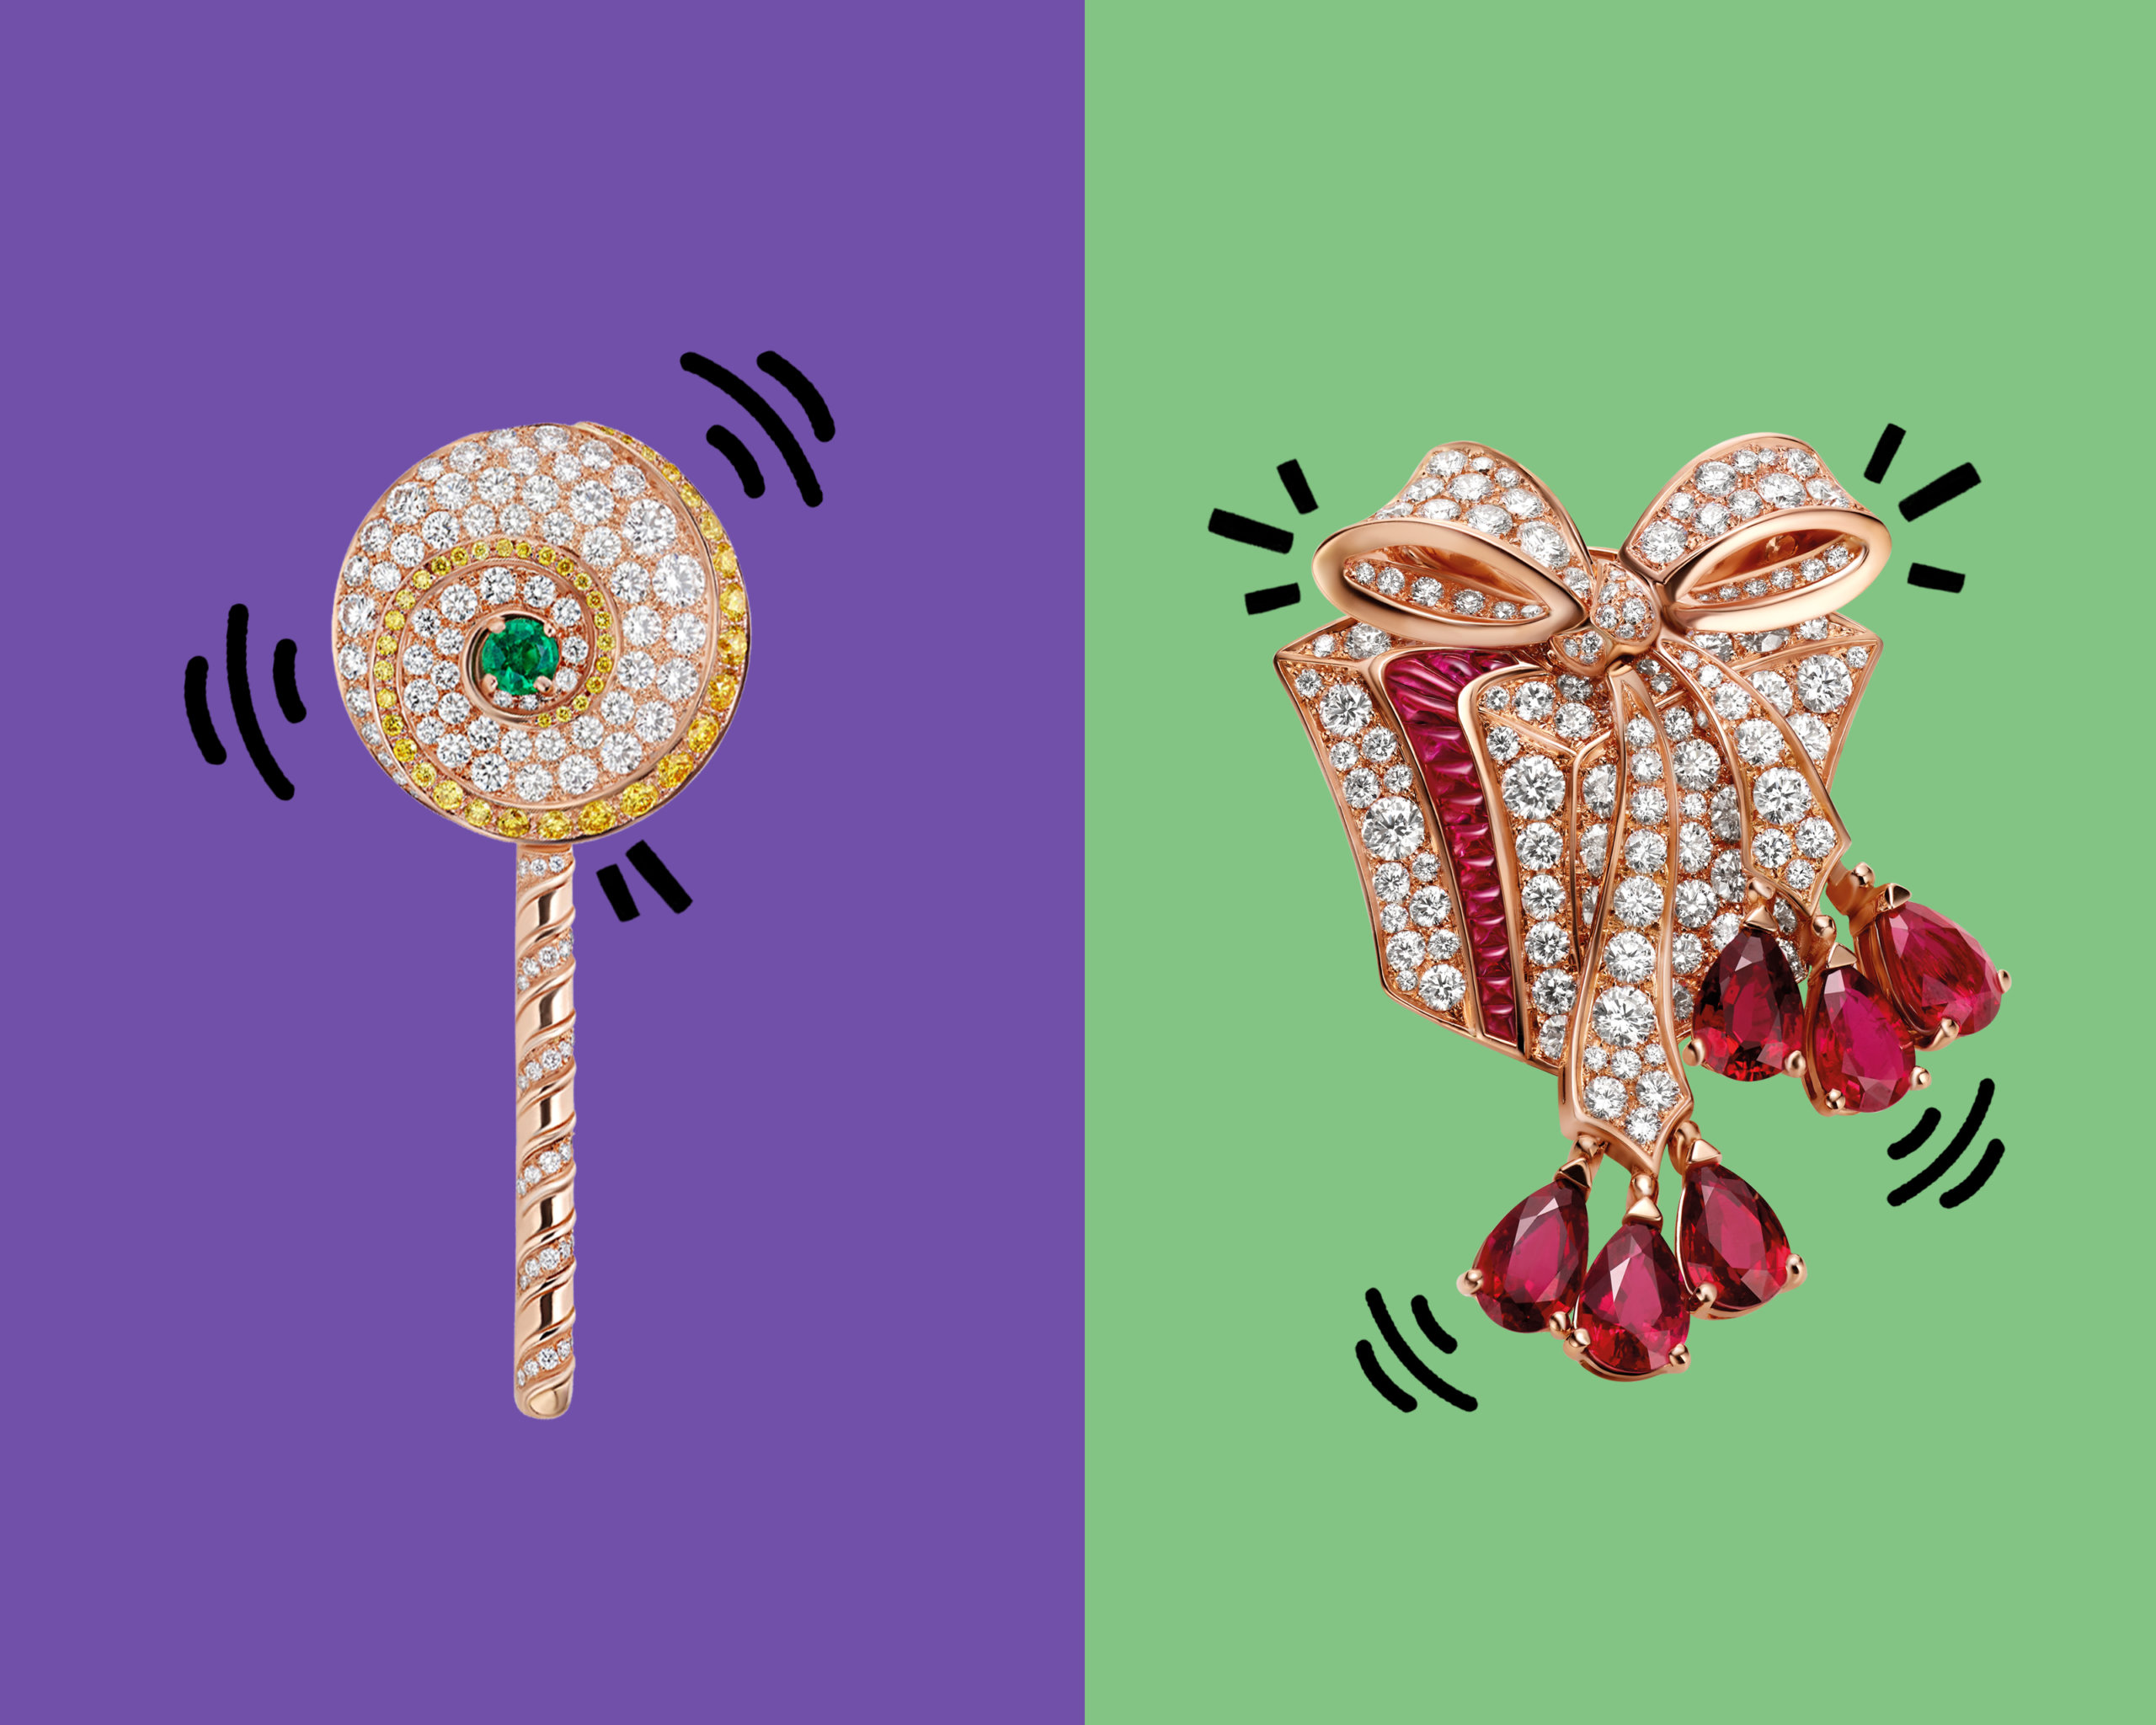 Round cut diamonds, pave diamonds, rubies and emeralds set with a lollipop emoji pendant & a present brooch from Bulgari 